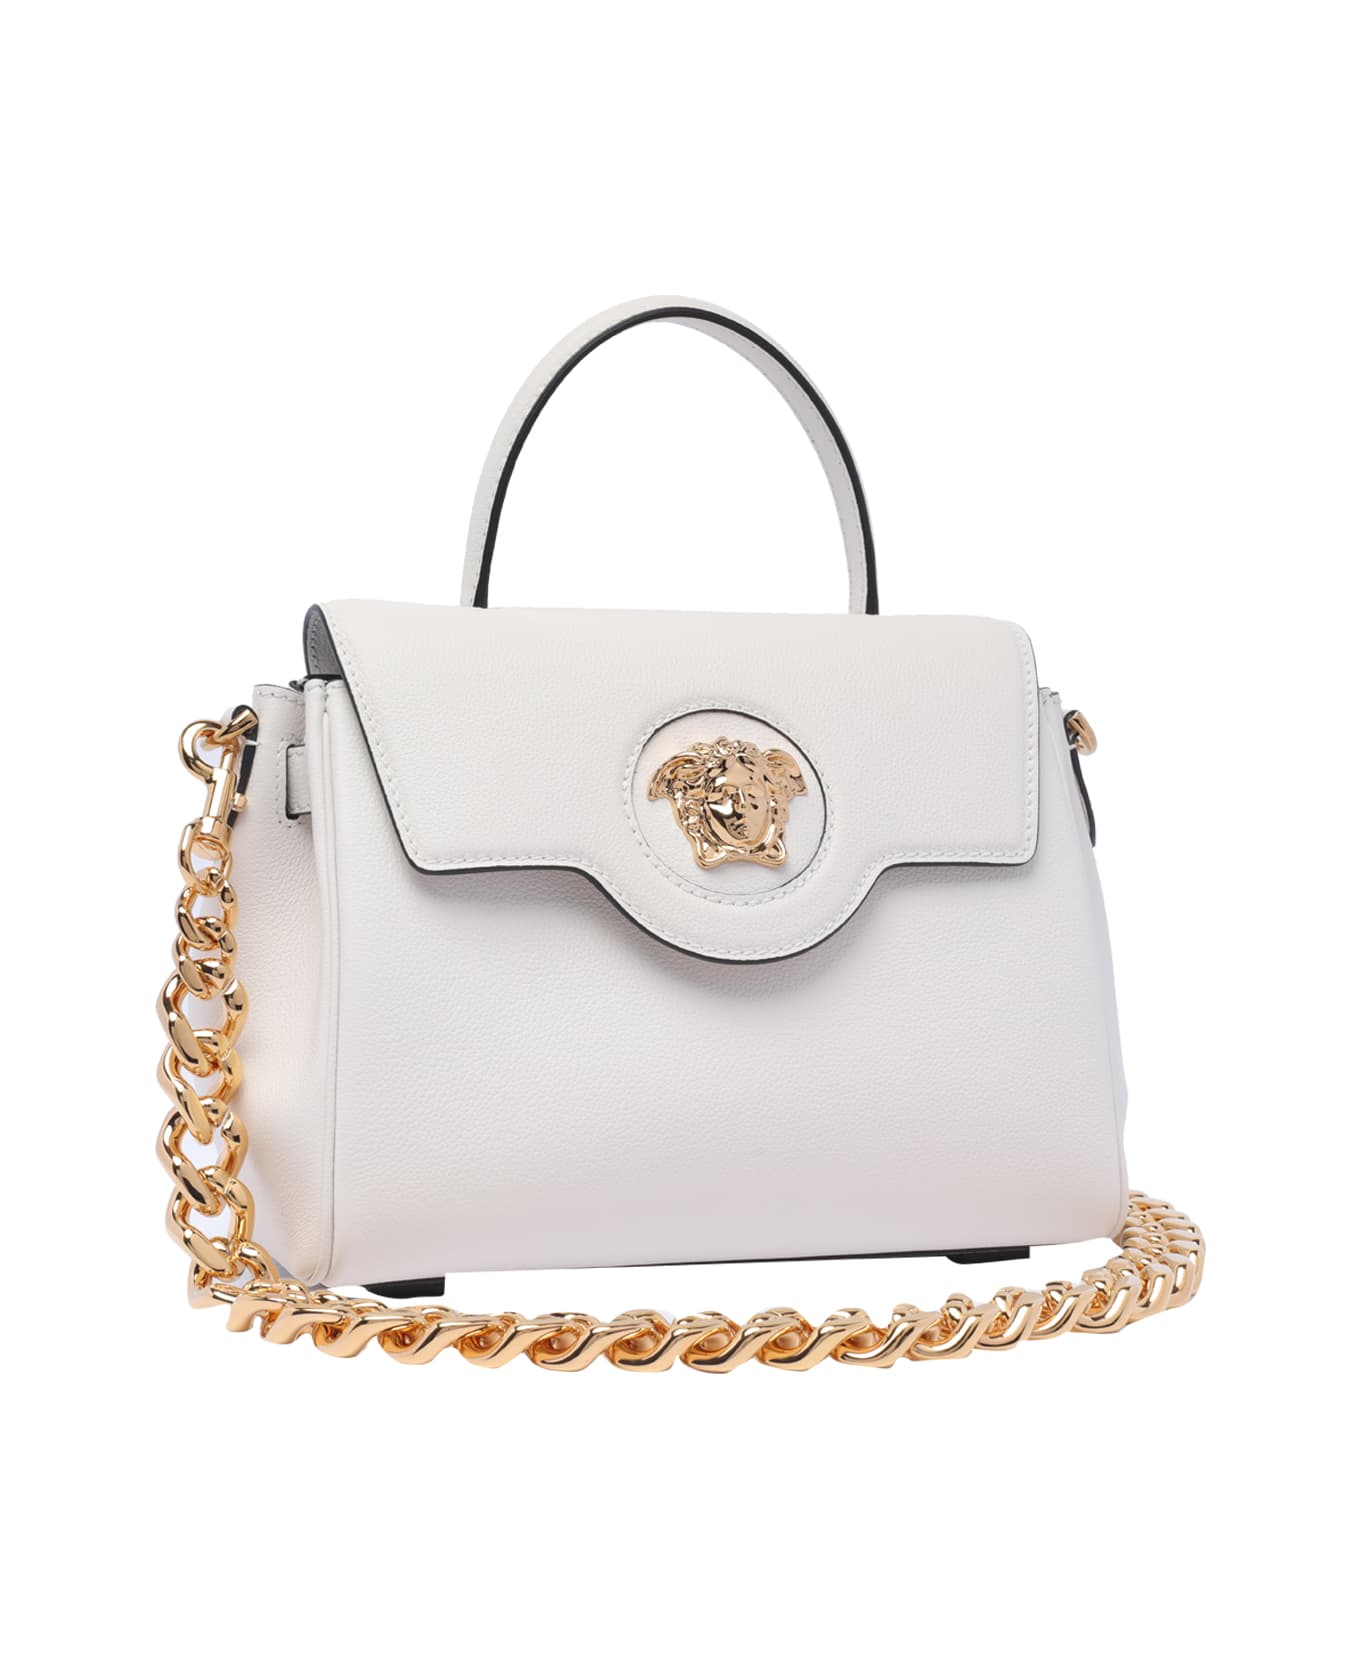 Versace La Medusa Handbag - White トートバッグ